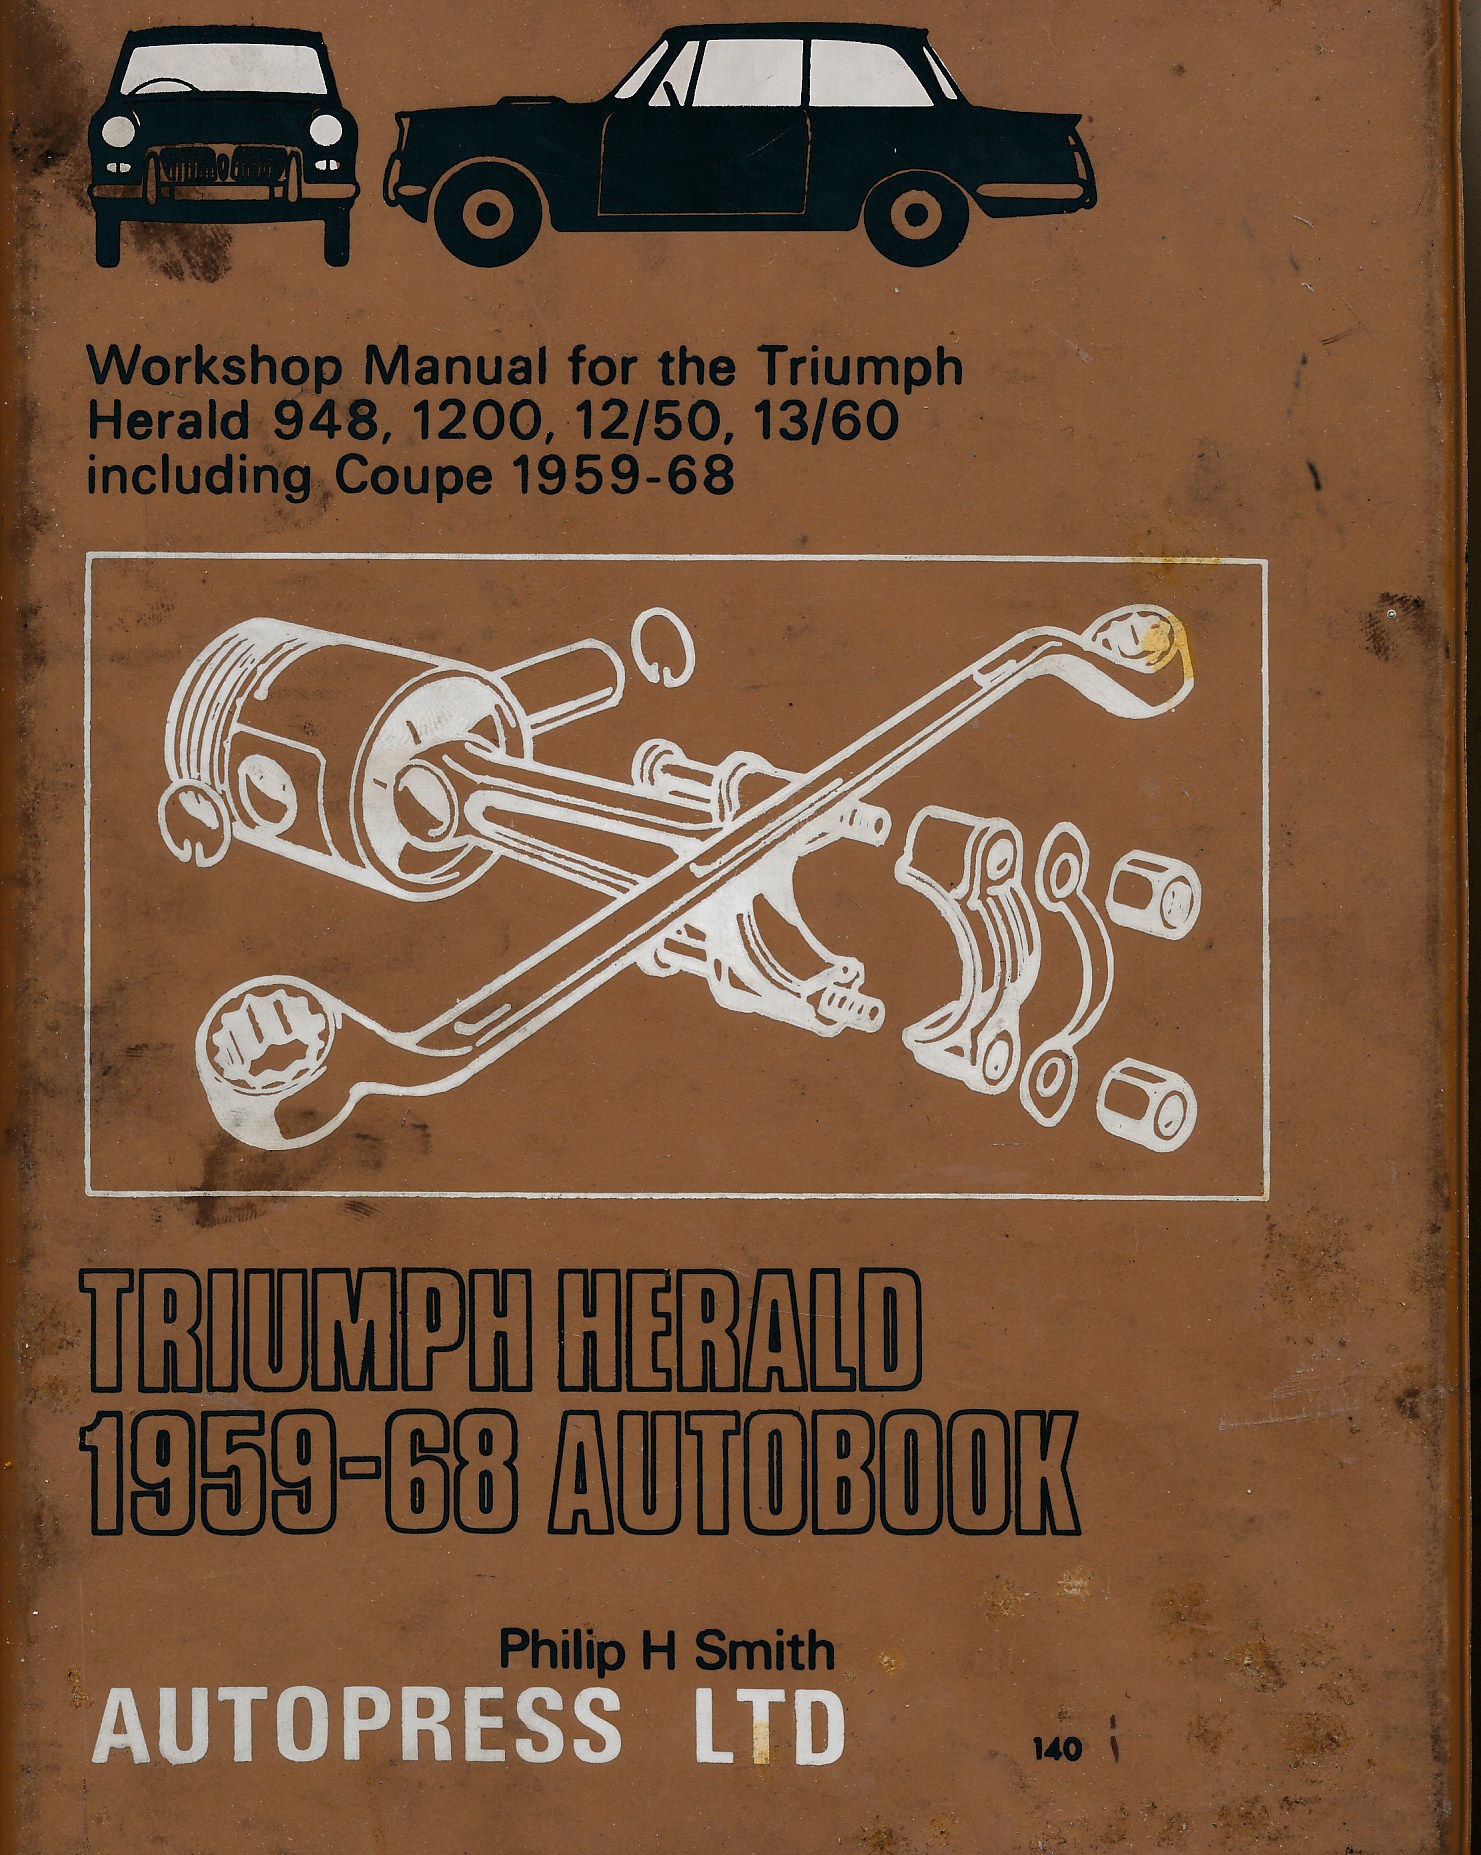 Triumph Herald 1959-68 Autobook